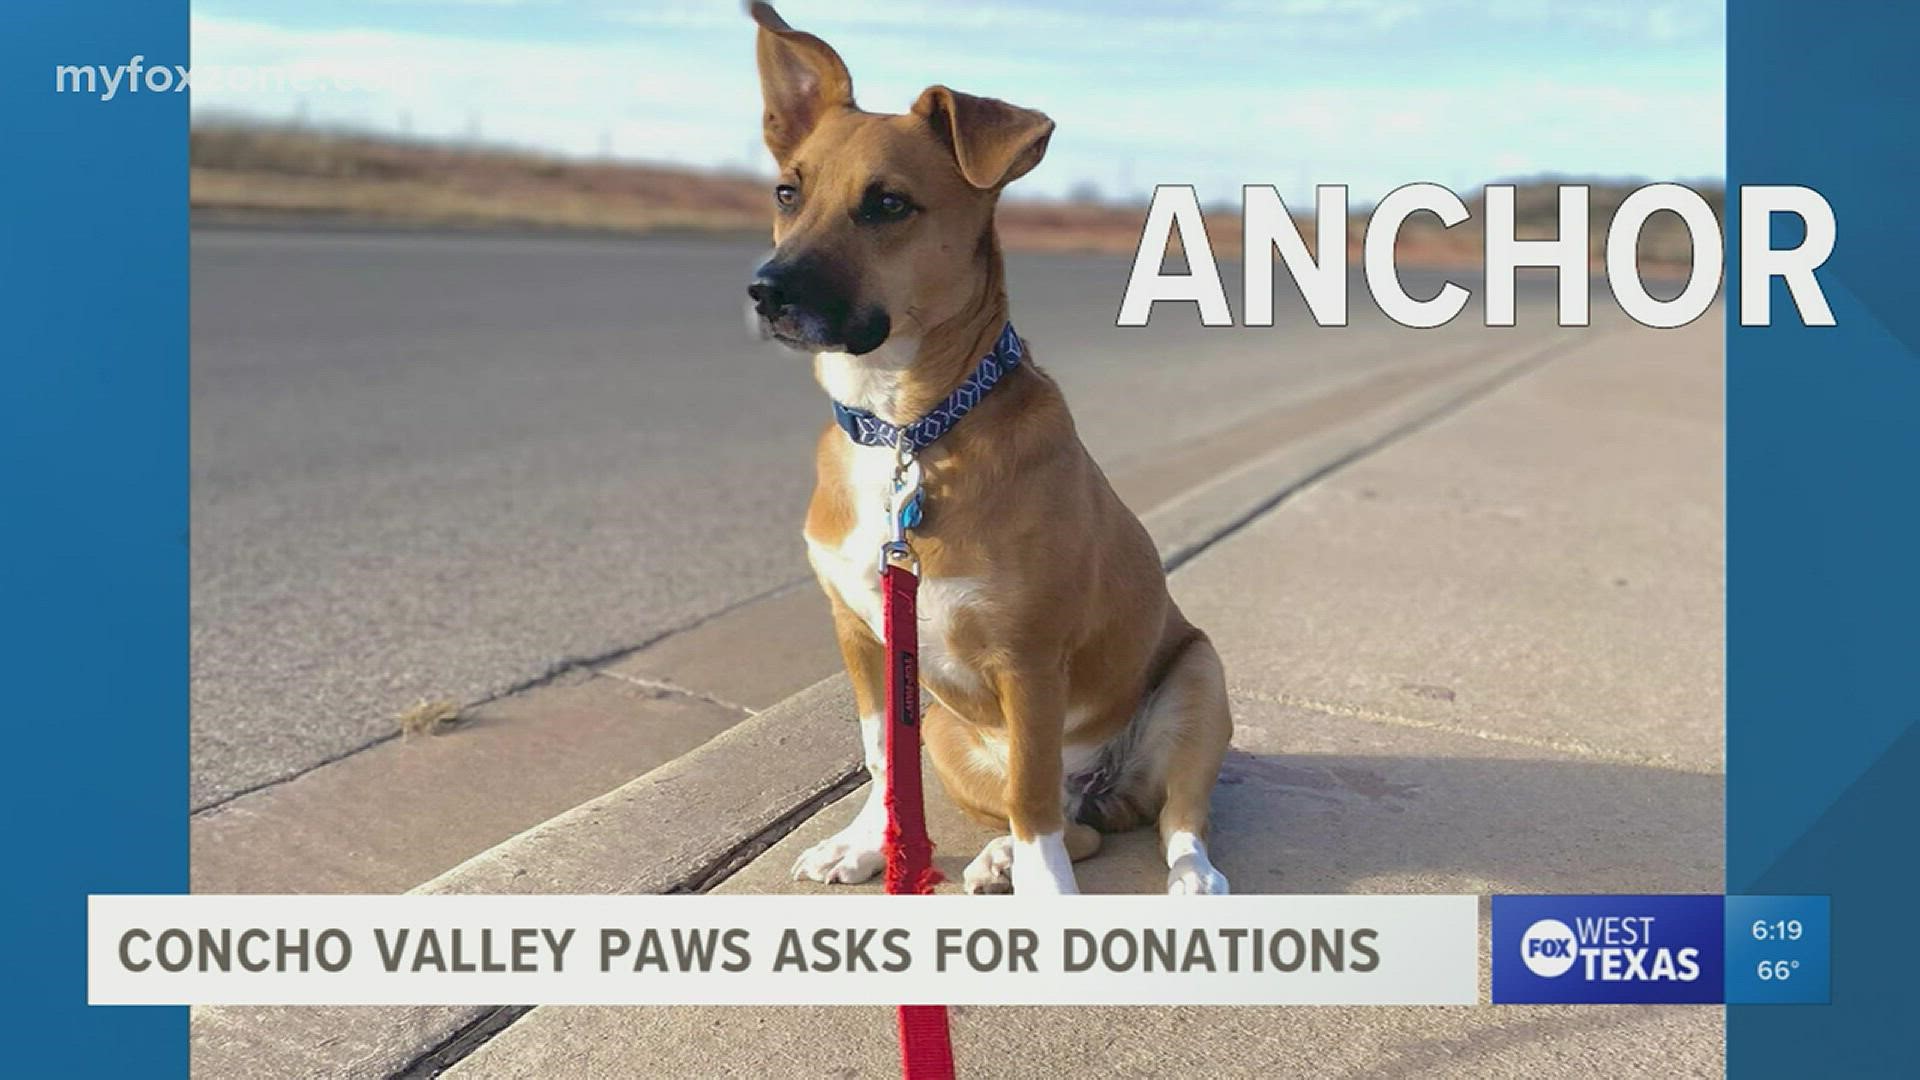 #BettyWhiteChallenge is used to donate to favorite nonprofit animal organizations.